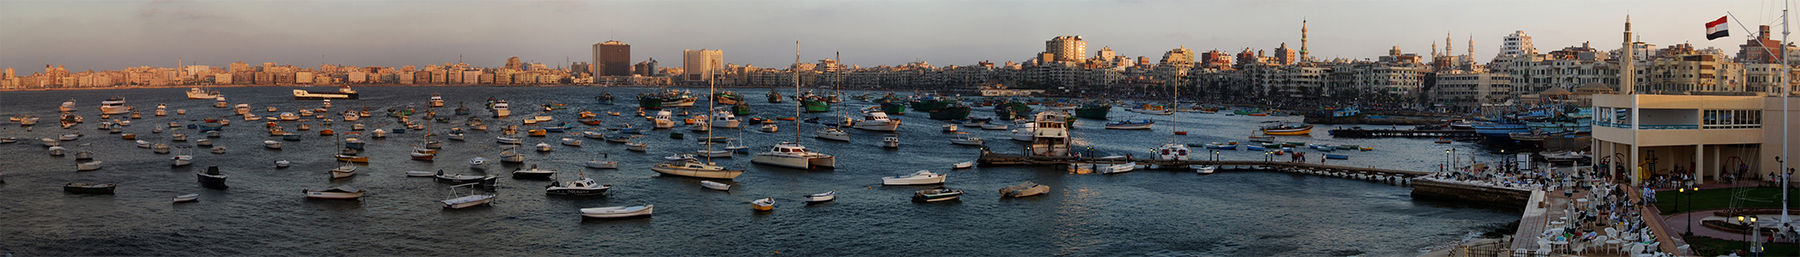 Alexandria harbor banner.jpg